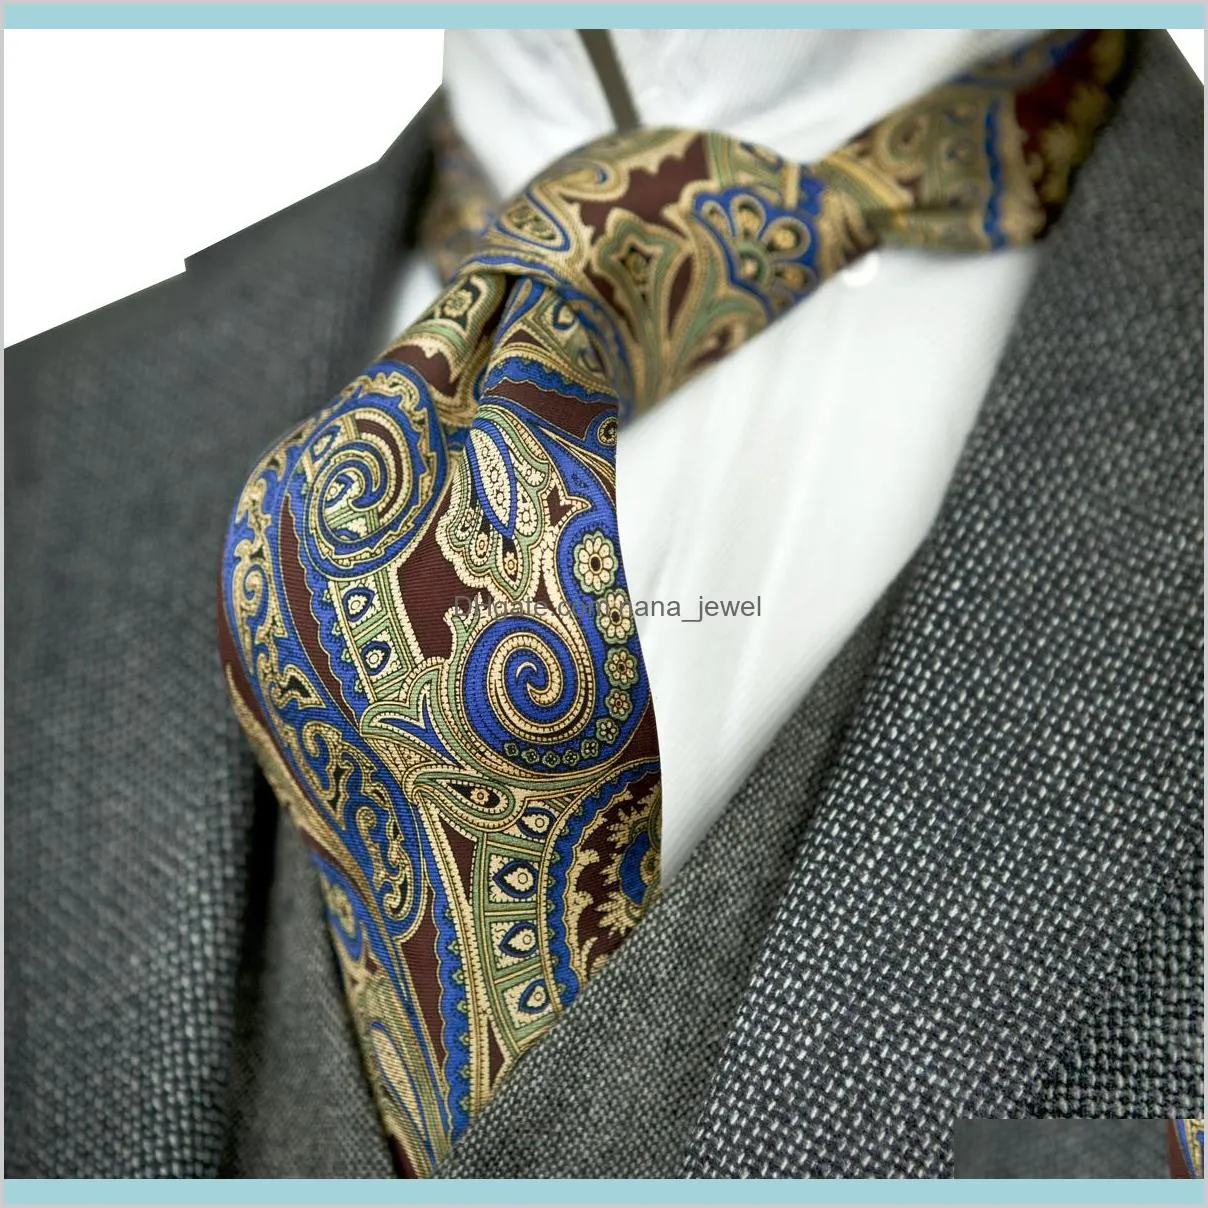 Hals-Accessoires, bedruckte Vintage-Krawatten, Blumenmuster, mehrfarbig, 100 % Seide, Herren-Krawatten, bedruckte Krawatten-Sets, 10 cm, Modemarke 251B